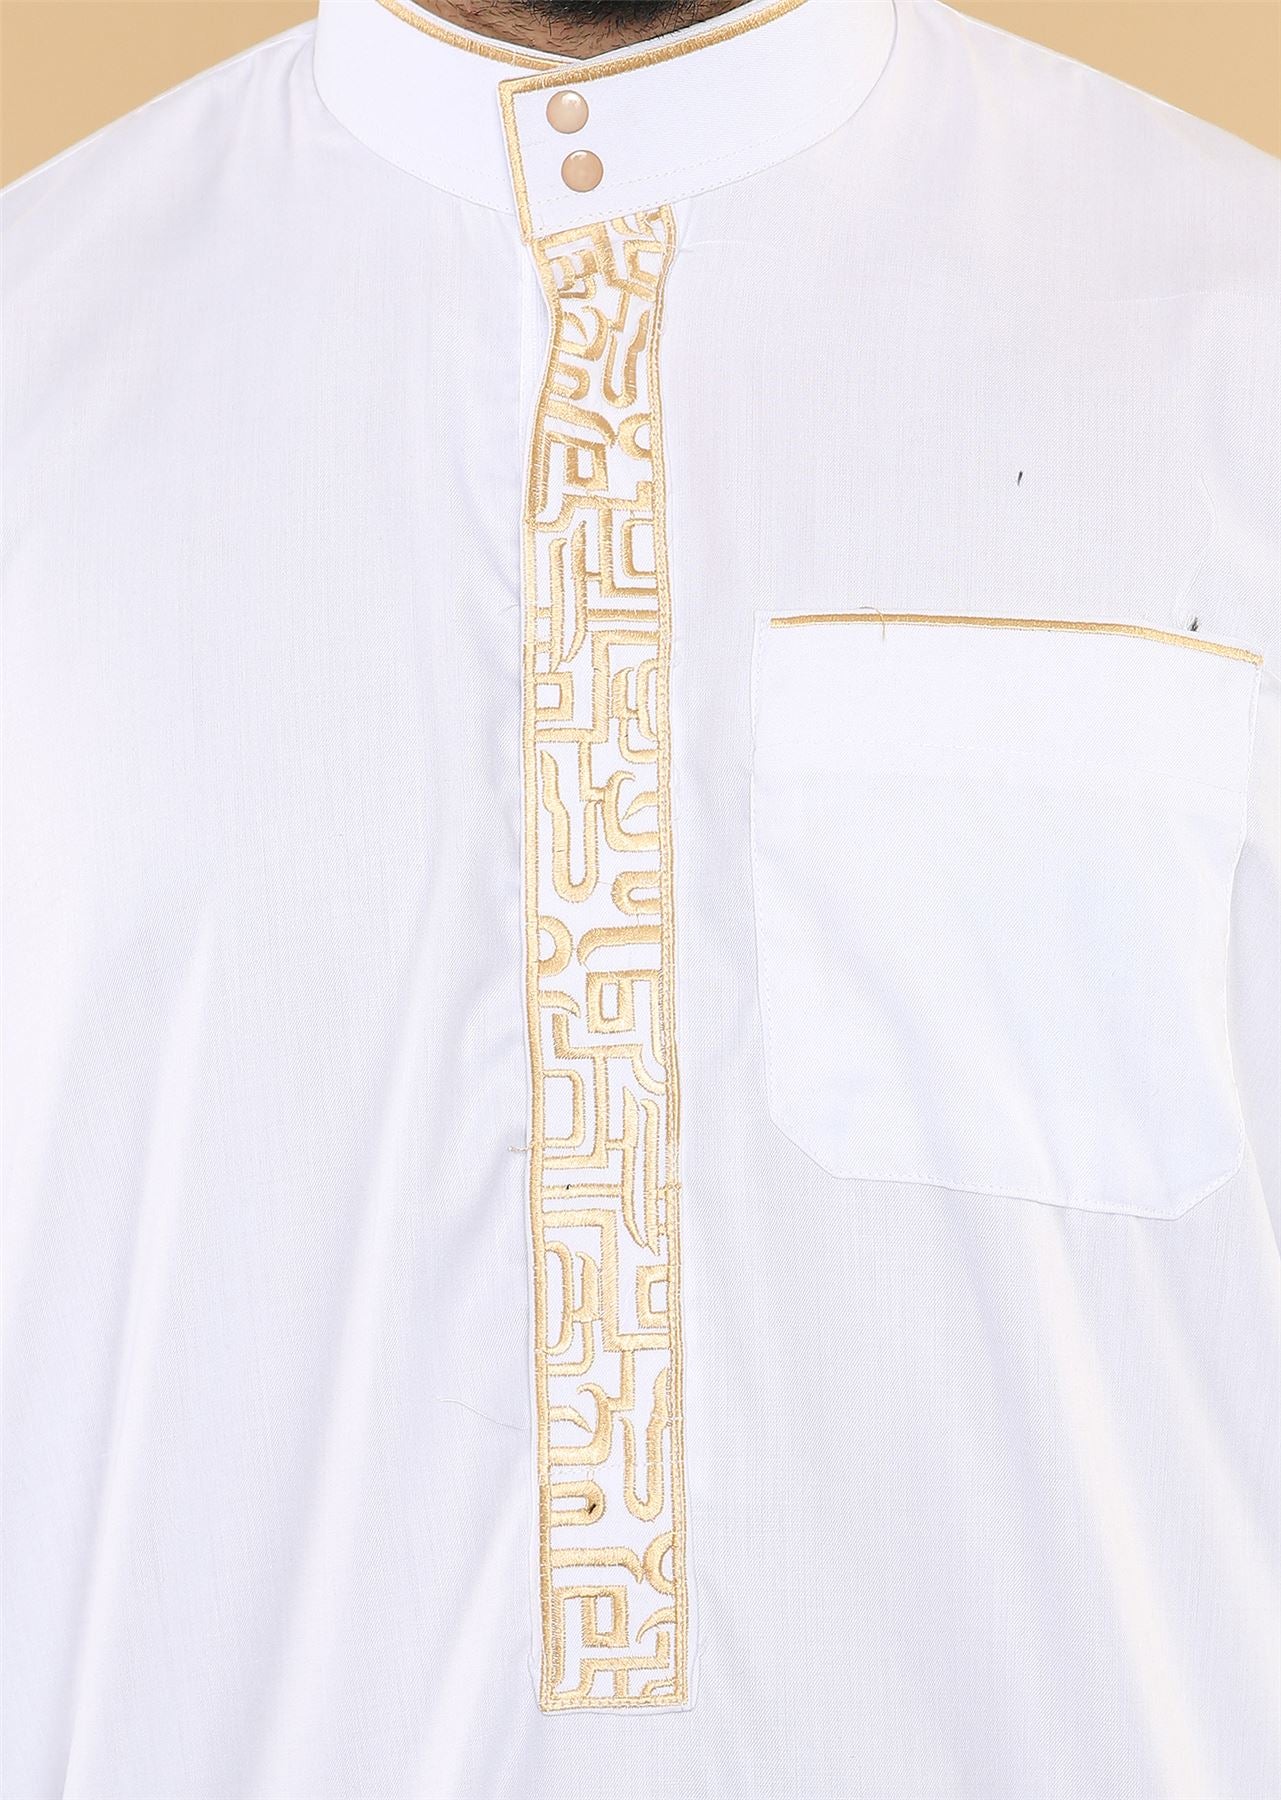 Men's Thobe Jubba Nehru Islamic Clothing Muslim Cotton Kaftan Embroidery Eid Robe